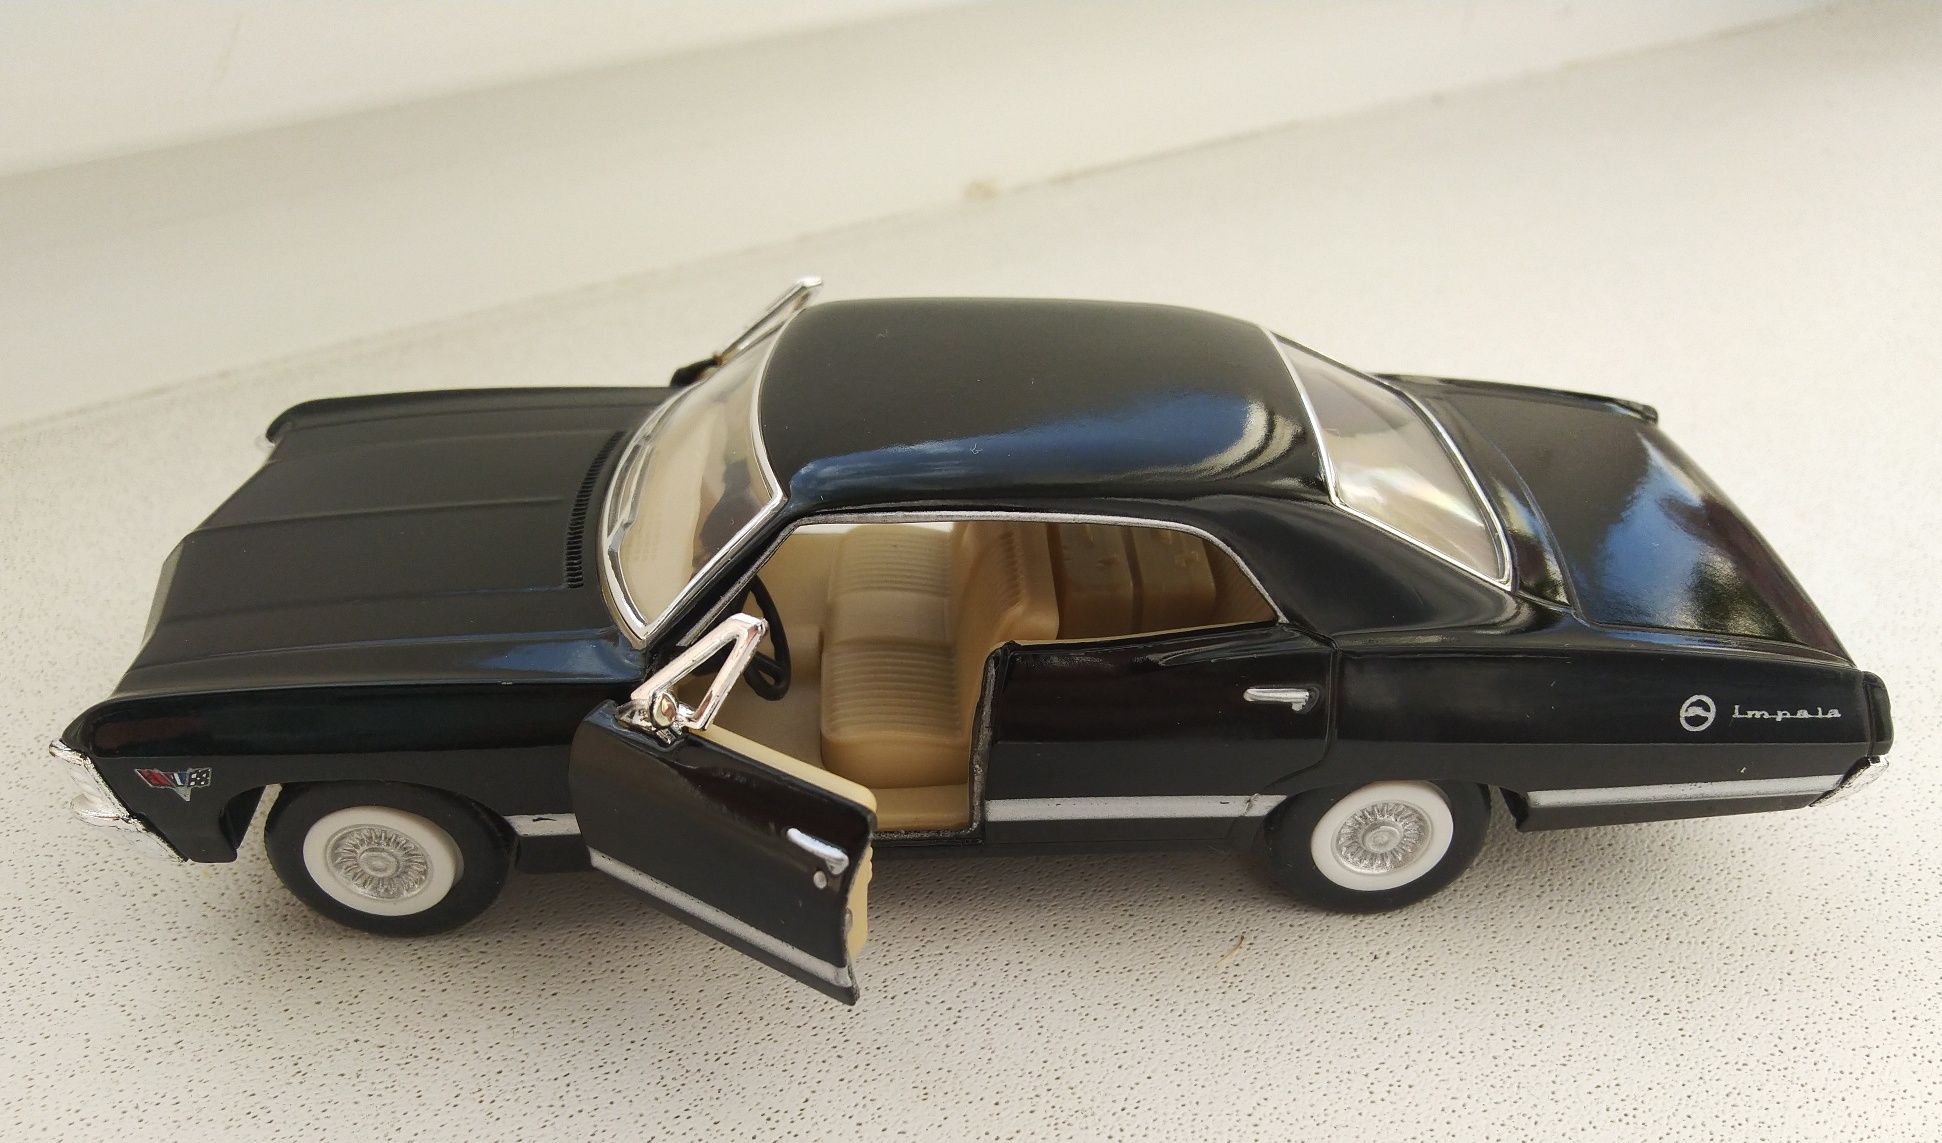 Chevrolet Impala 1967+(подарок)
(металл/масштаб 1/43)
(металл/ма